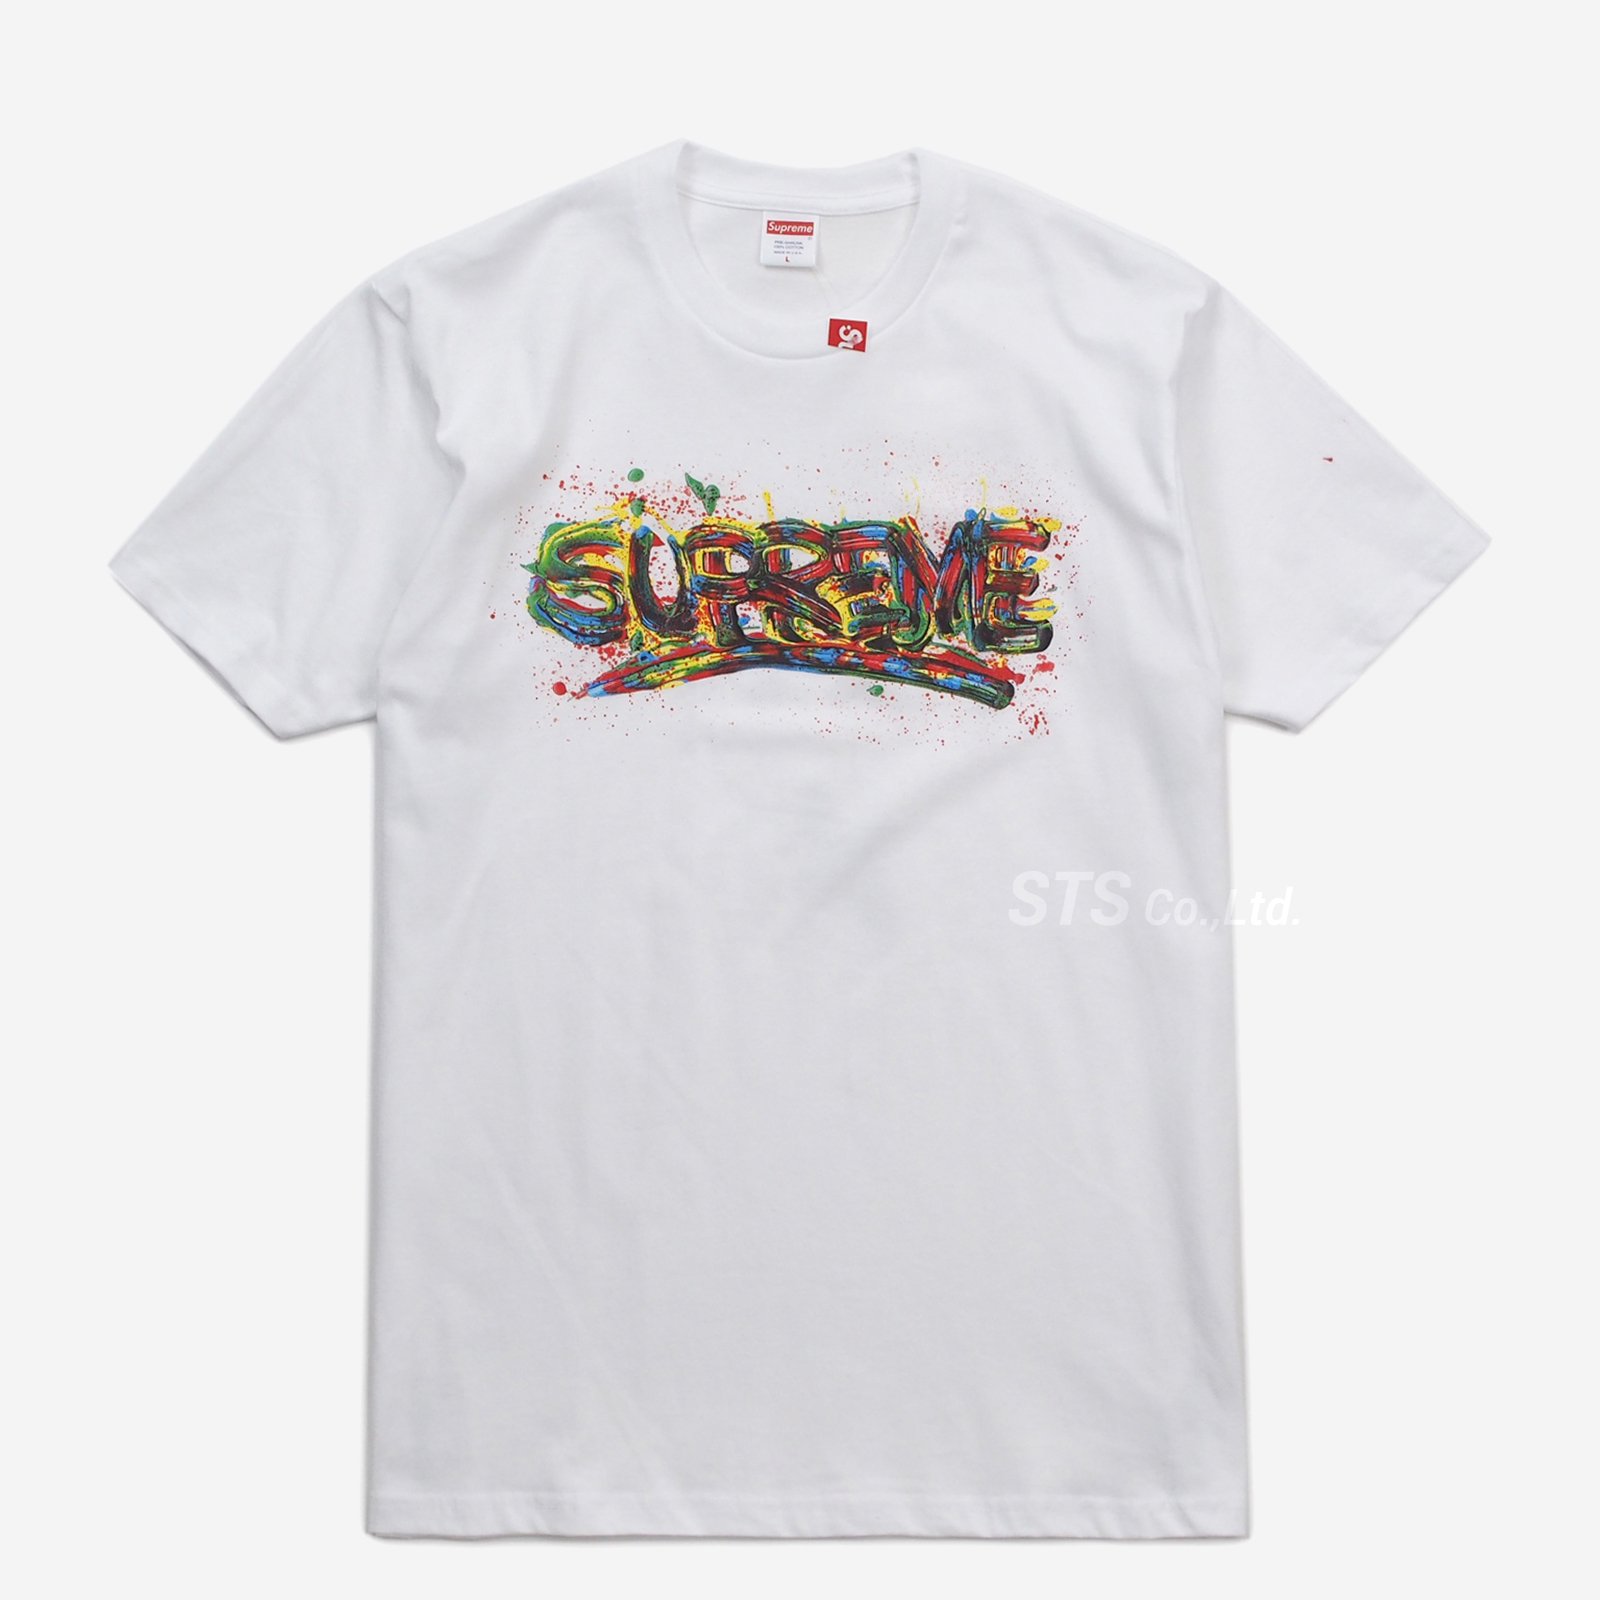 Supreme painted logo shirt Royal Lサイズ